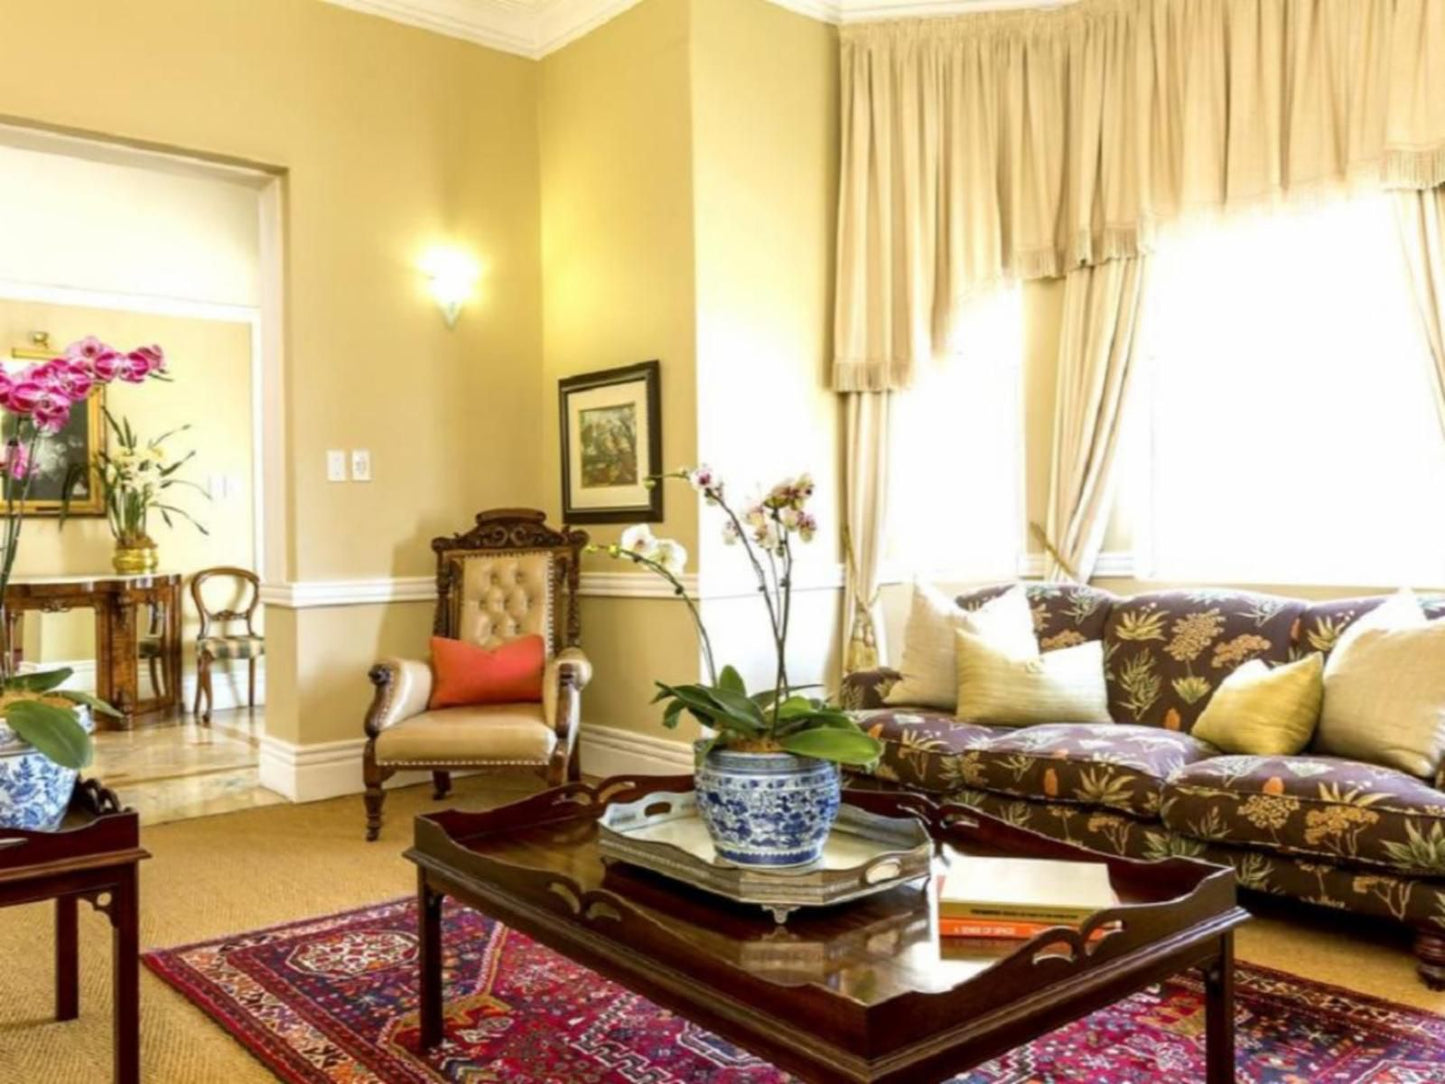 The Benjamin Apart Hotel Windermere Durban Kwazulu Natal South Africa Living Room